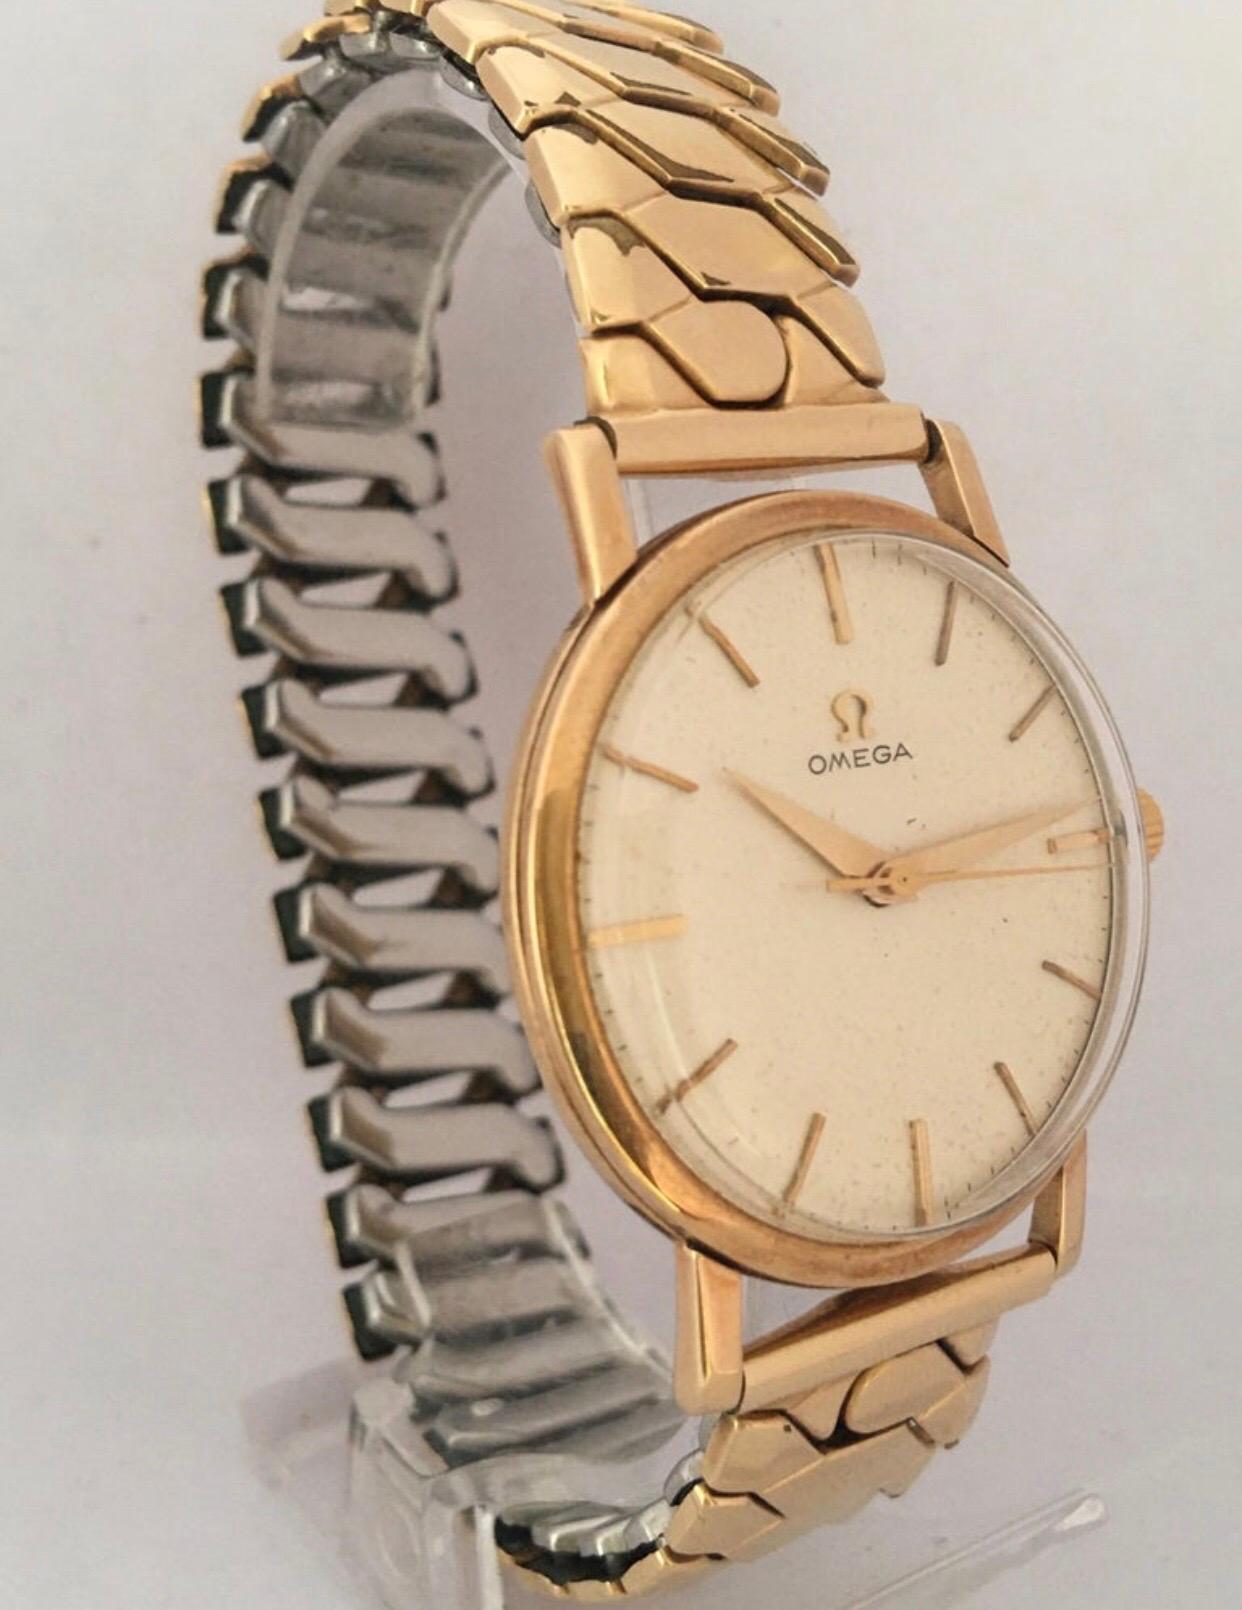 9 Karat Gold and Rolled Gold Bracelet 1960s Omega Mechanical Watch For Sale 10